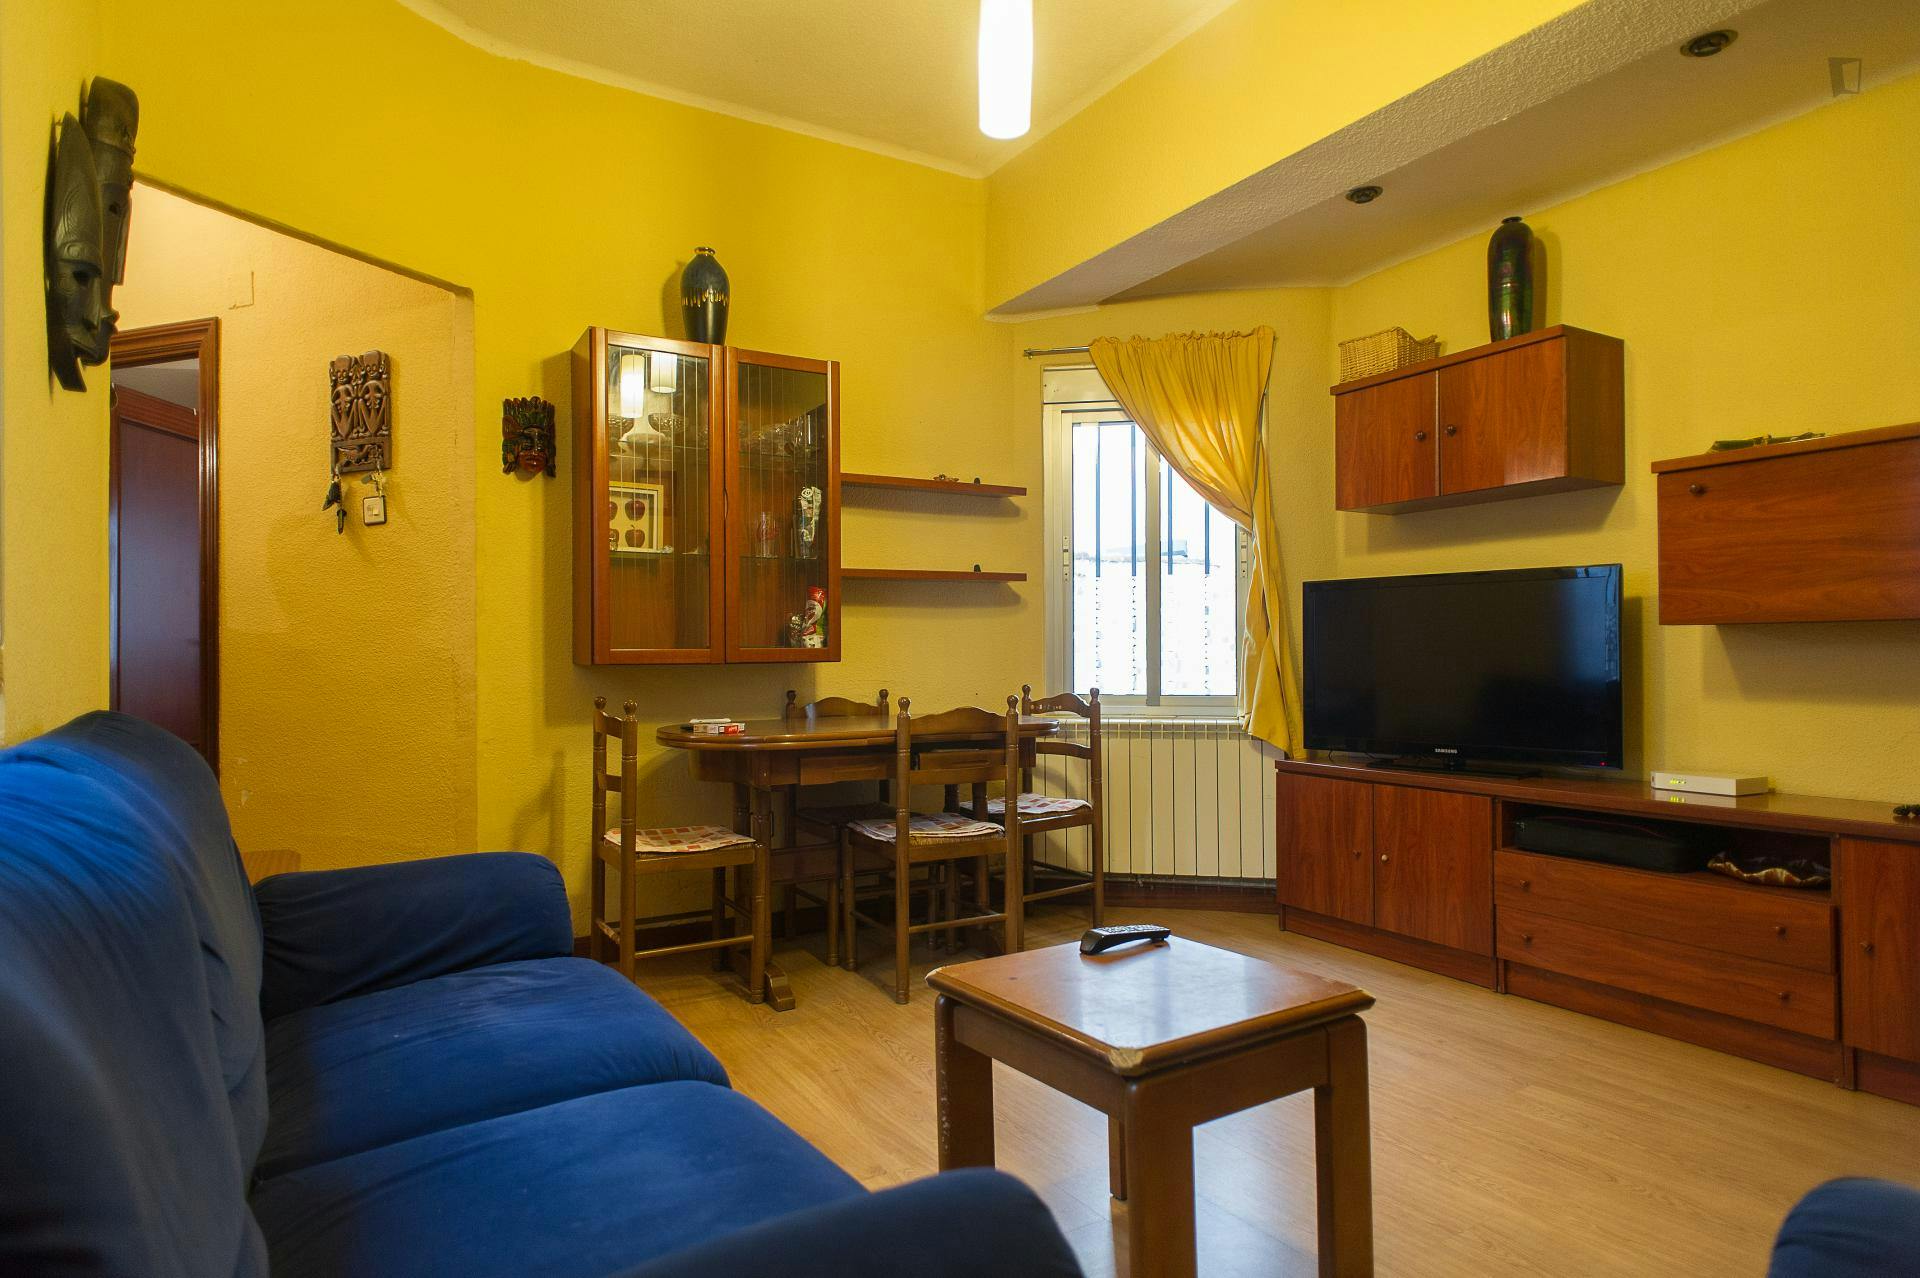 Lovely 2-bedroom flat in sunny Salamanca